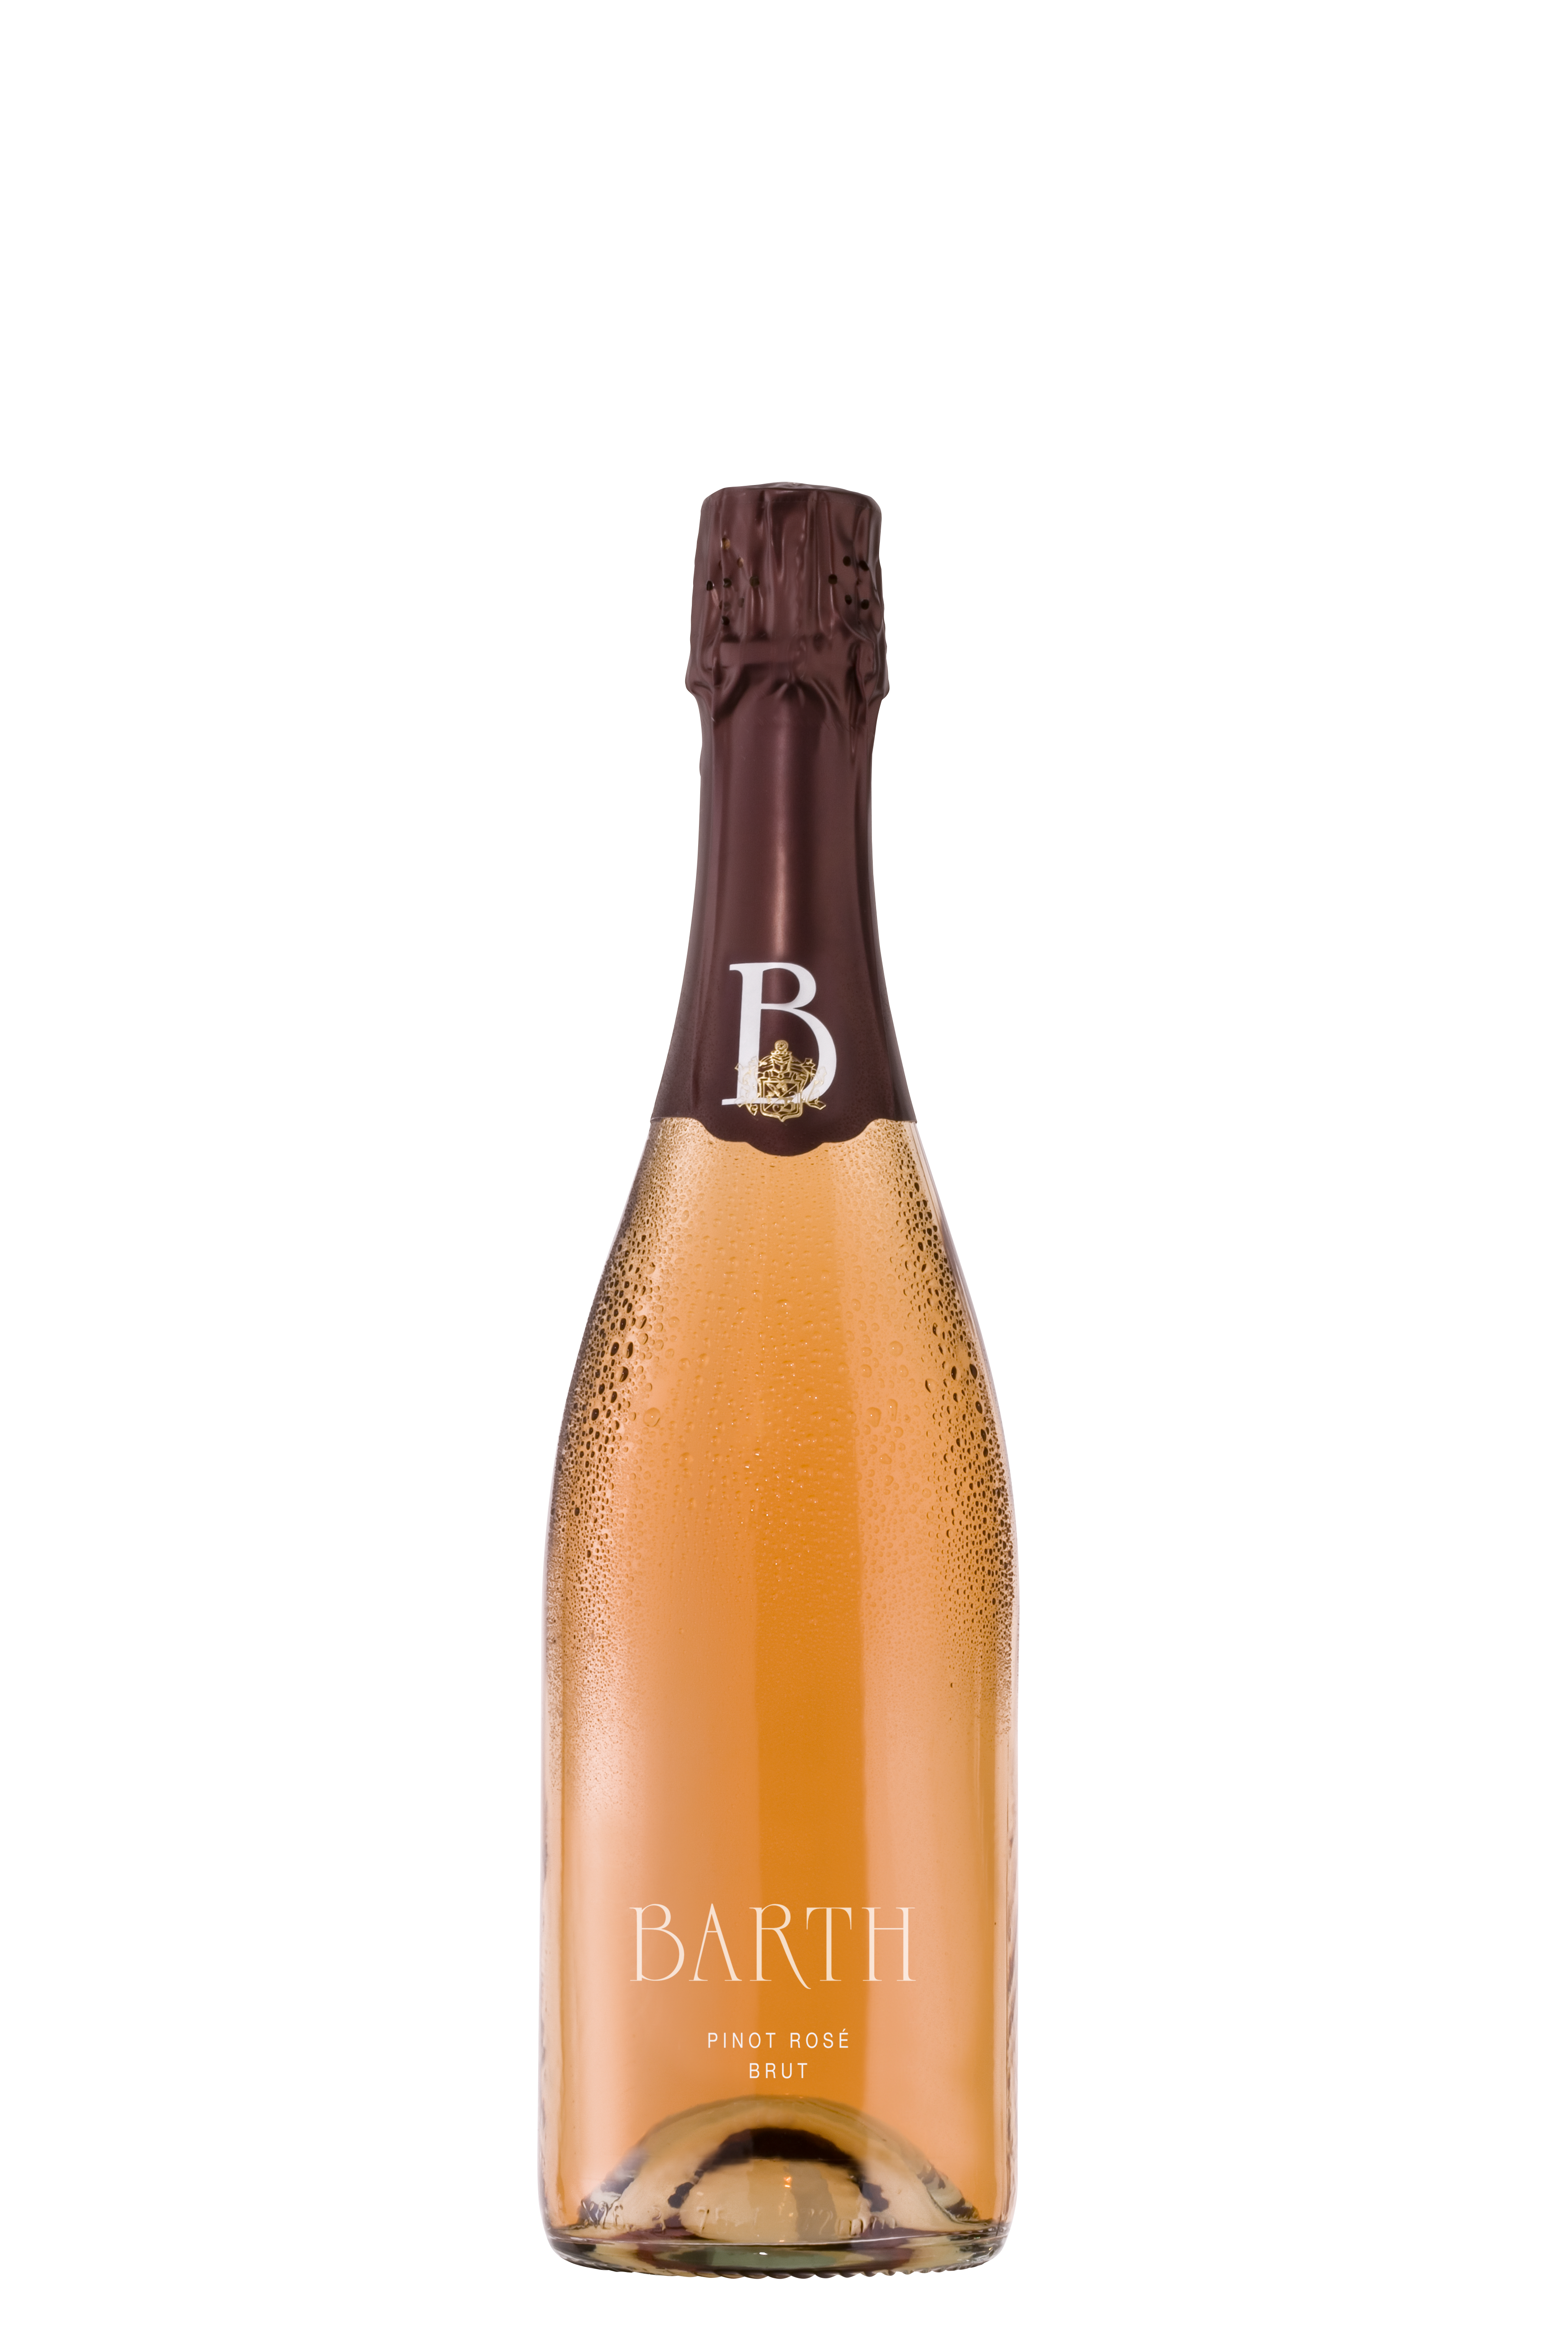 Barth | Pinot rosé brut